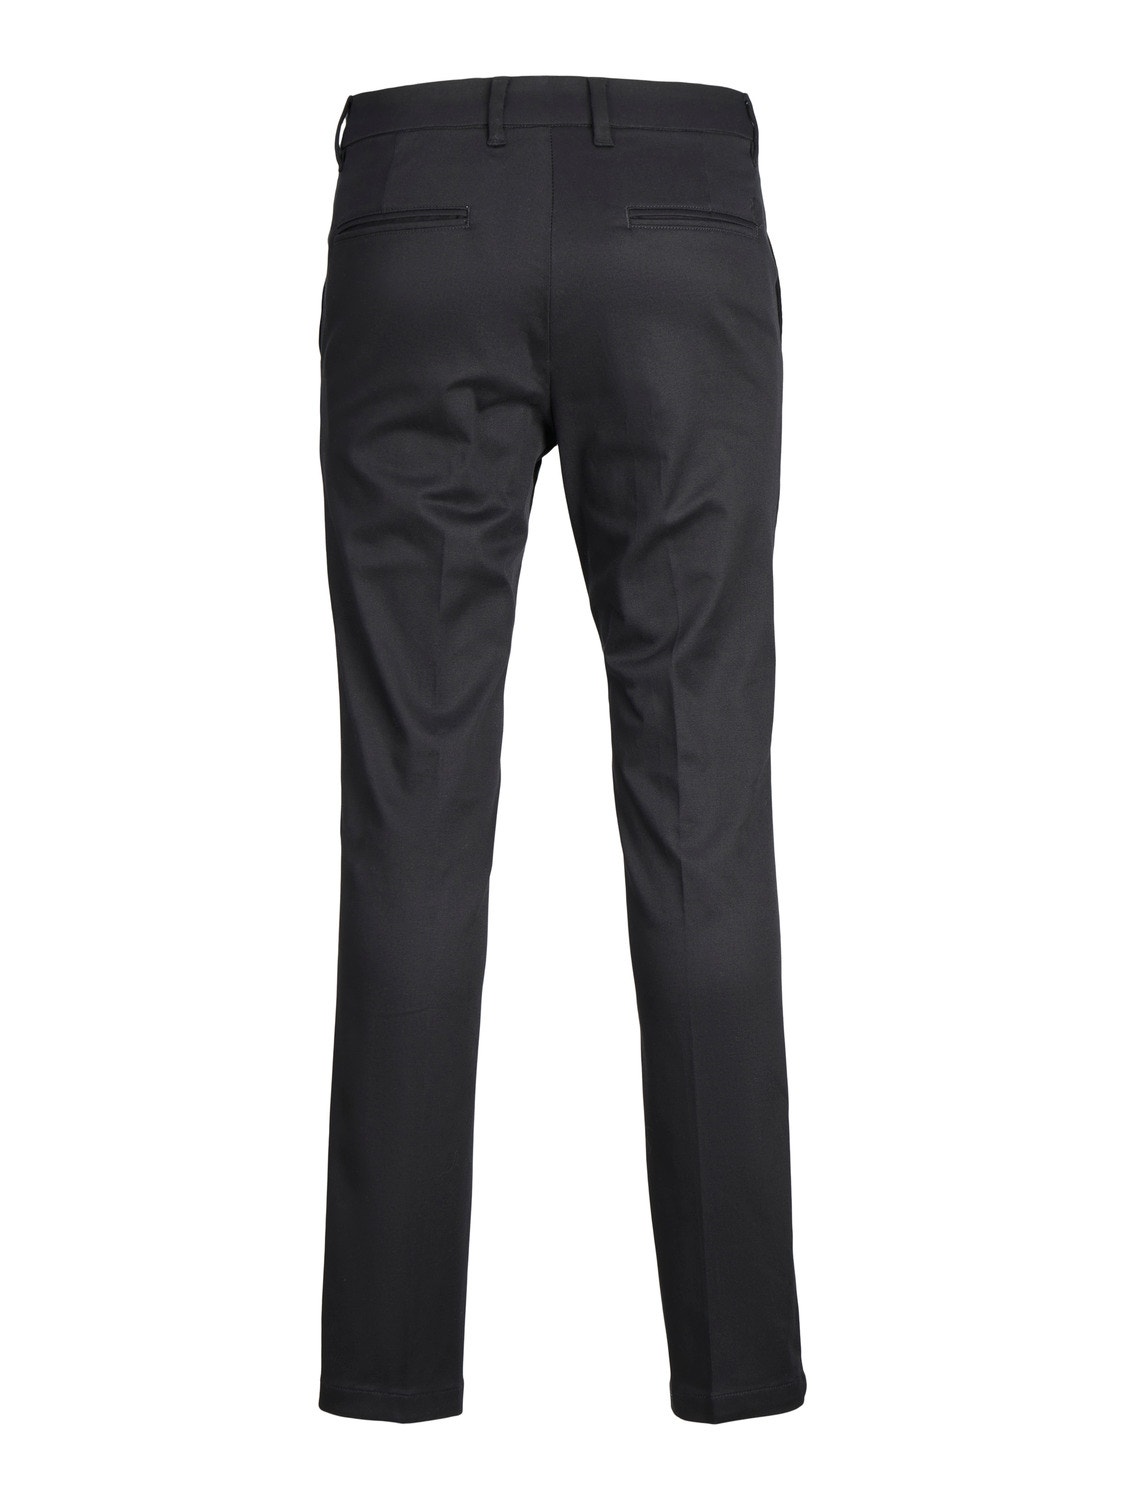 Jack & Jones Slim Fit Spodnie chino -Black - 12245343